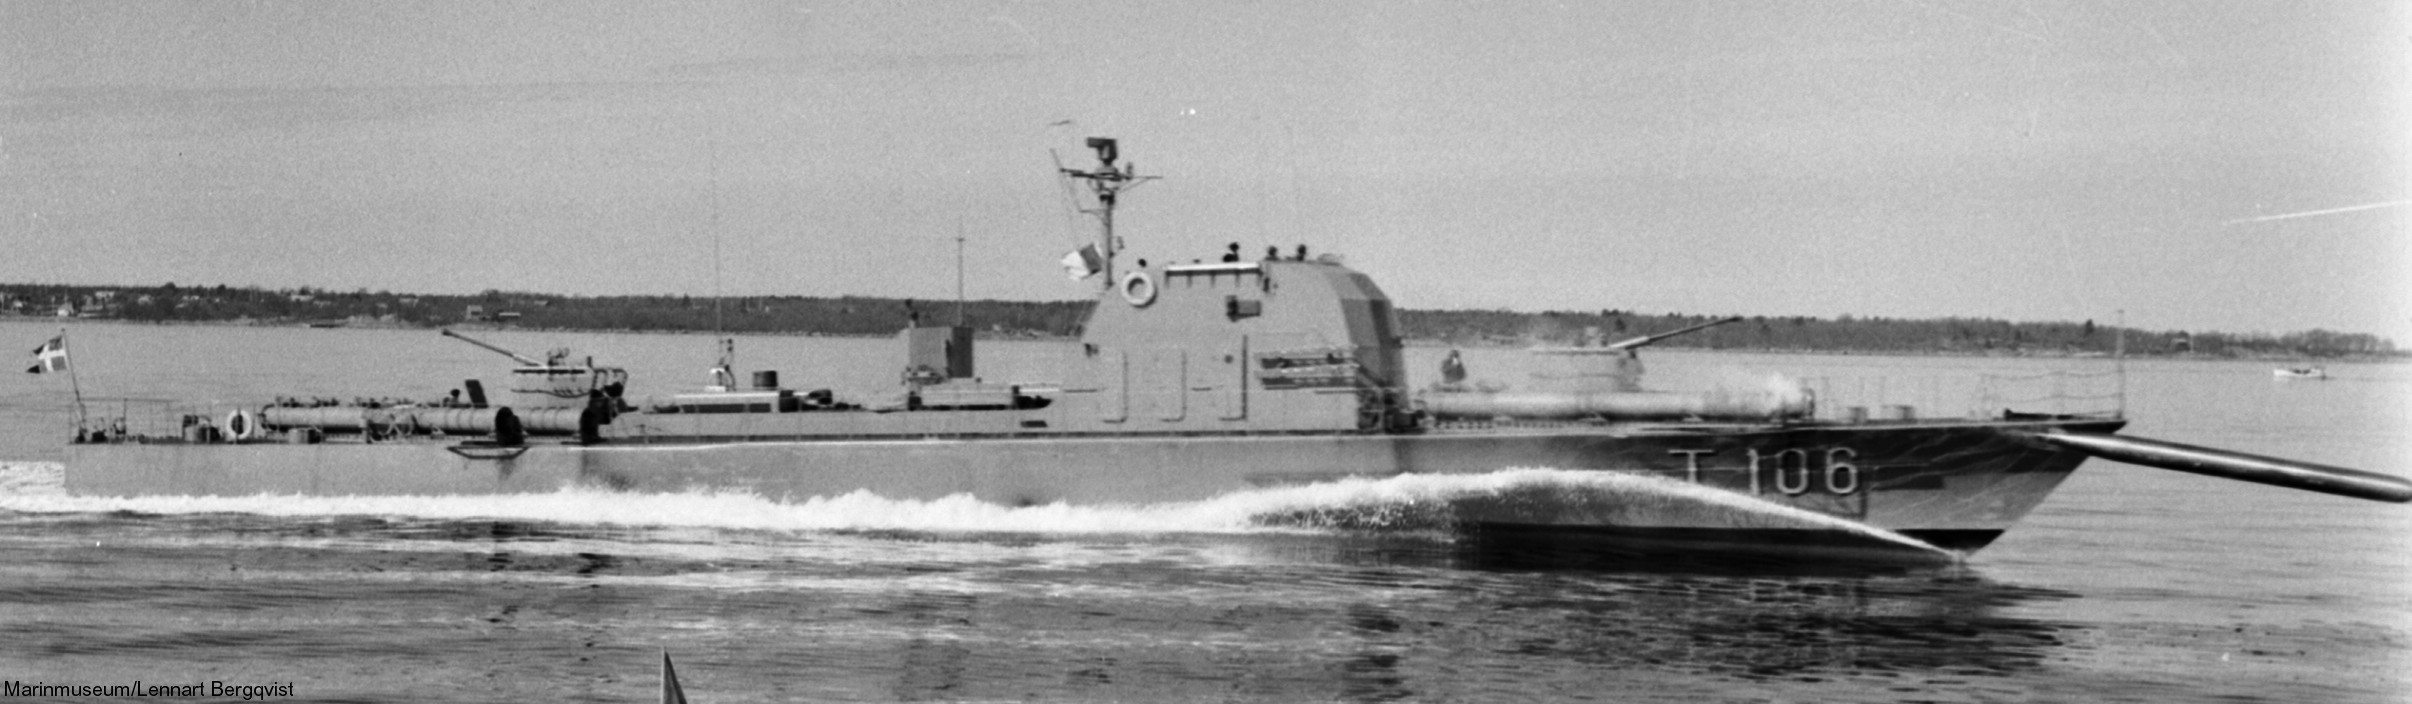 t106 rigel hms hswms plejad class fast attack craft torpedo boat vessel swedish navy svenska marinen 03